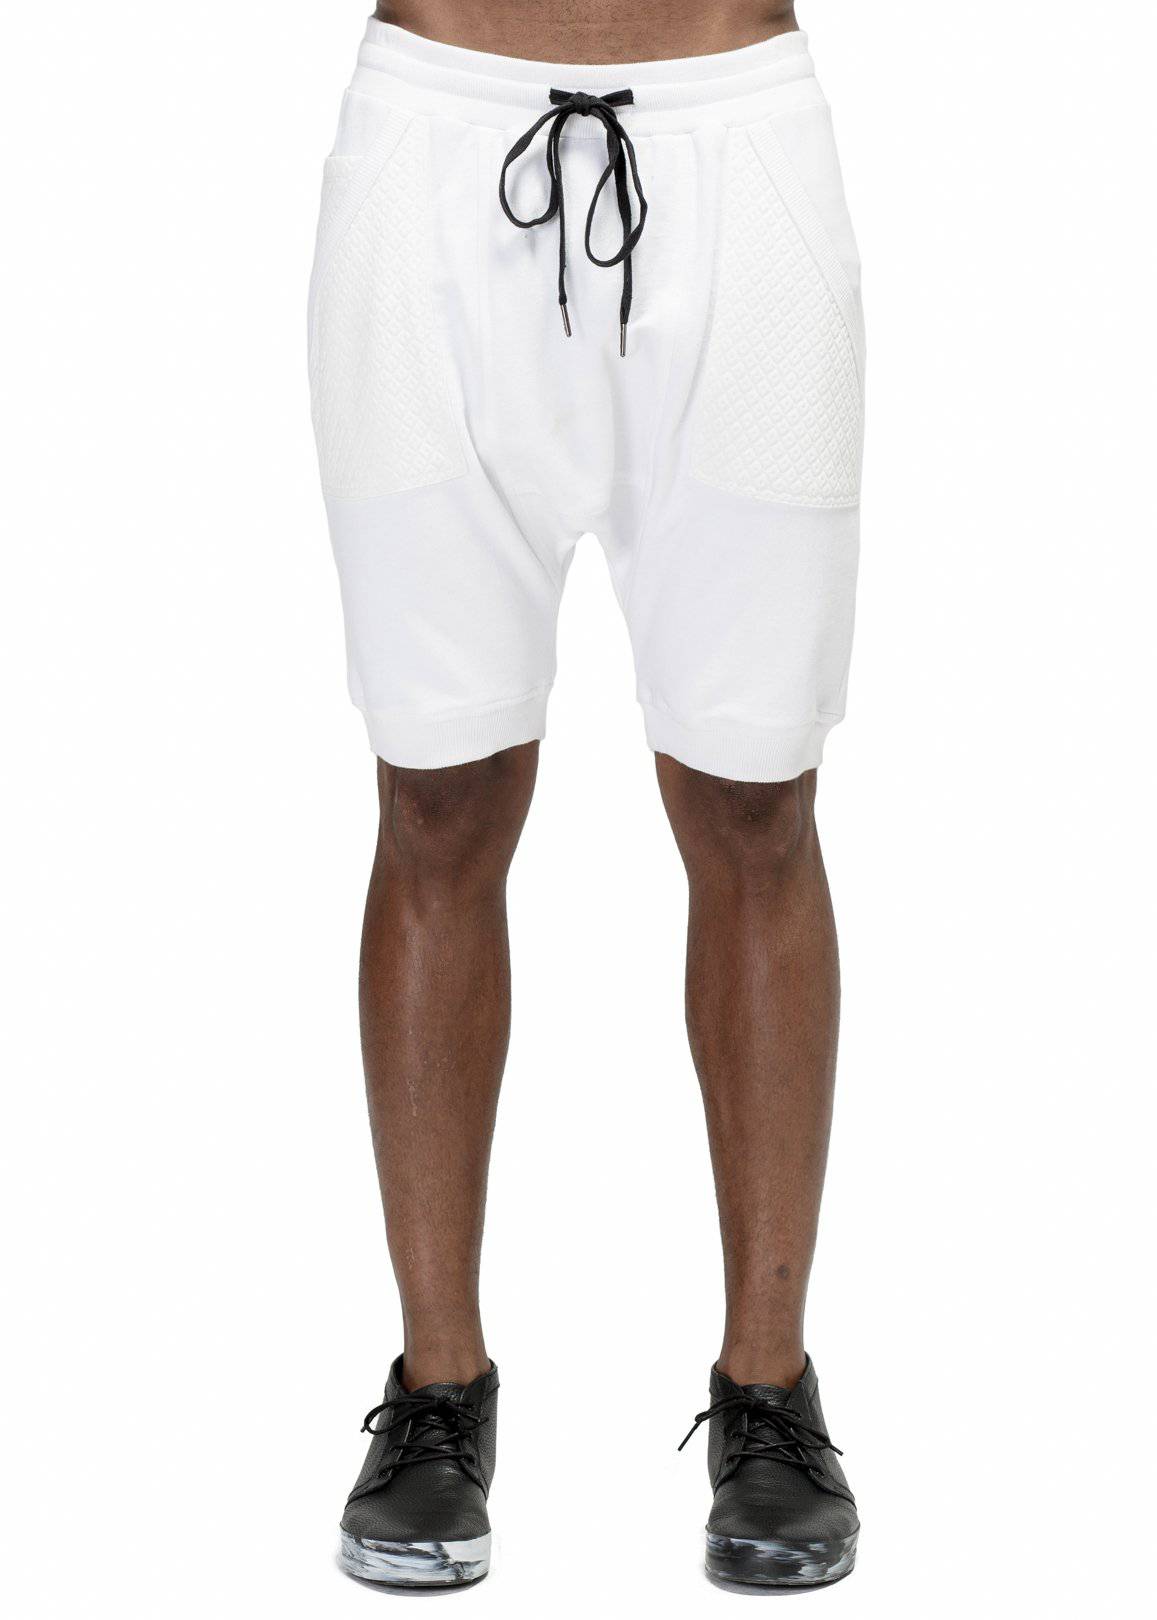 Konus Men's Drop Crotch Shorts Contrast Pockets in White by Shop at Konus